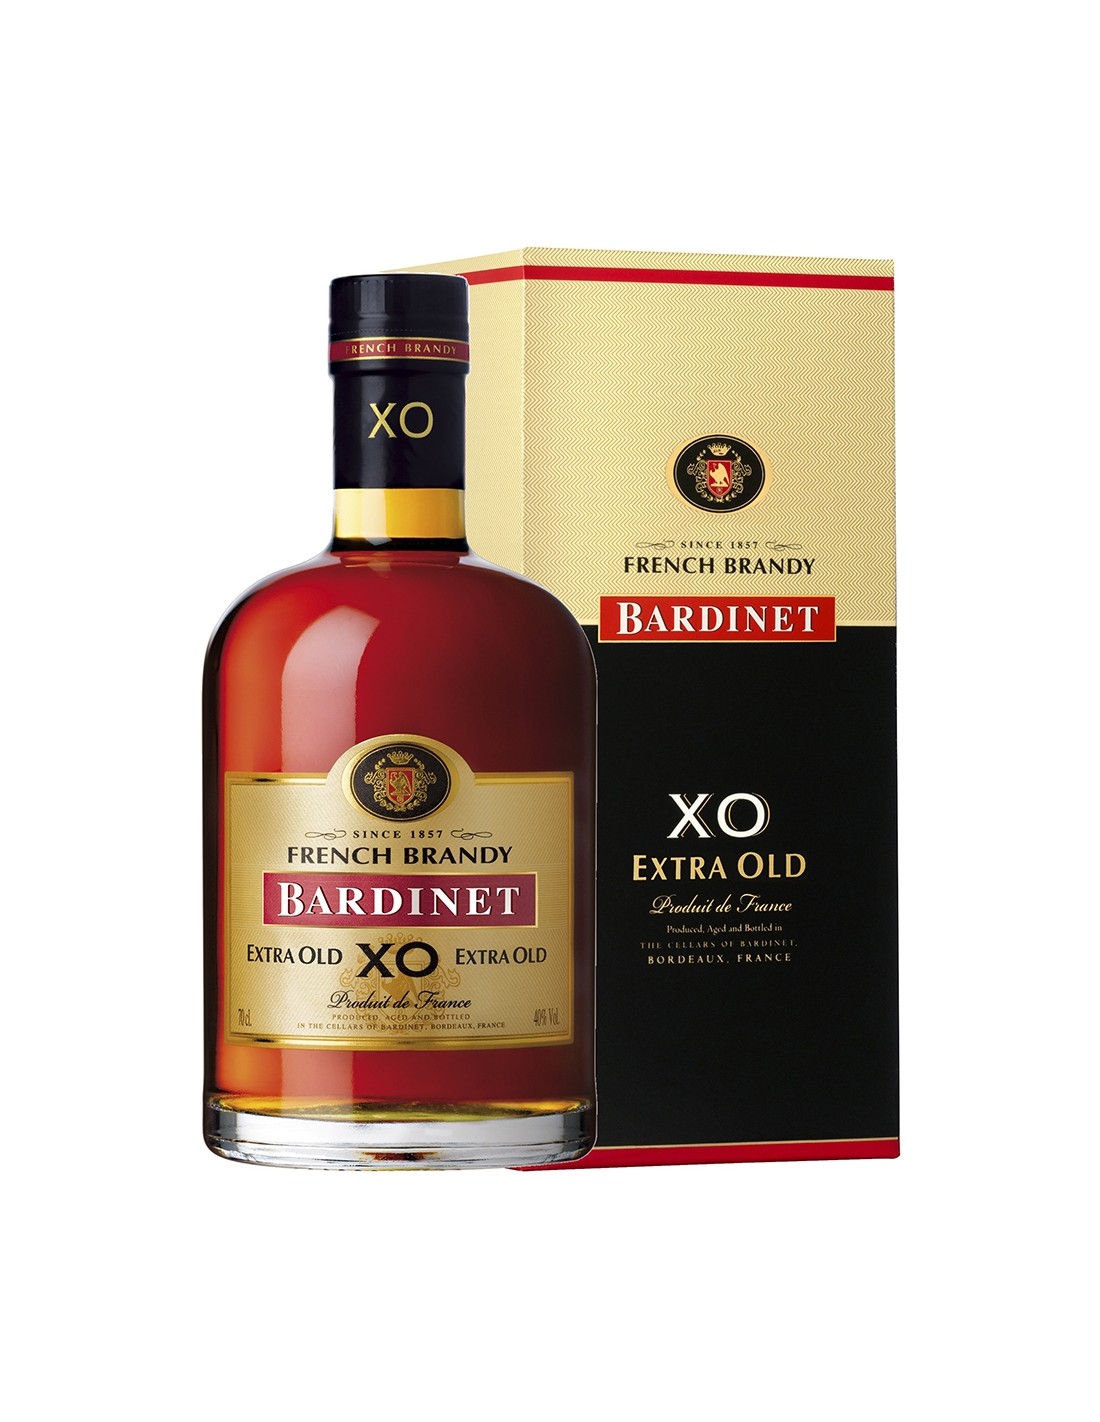 Coniac Brandy Bardinet XO 40% alc., 0.7L, Franta